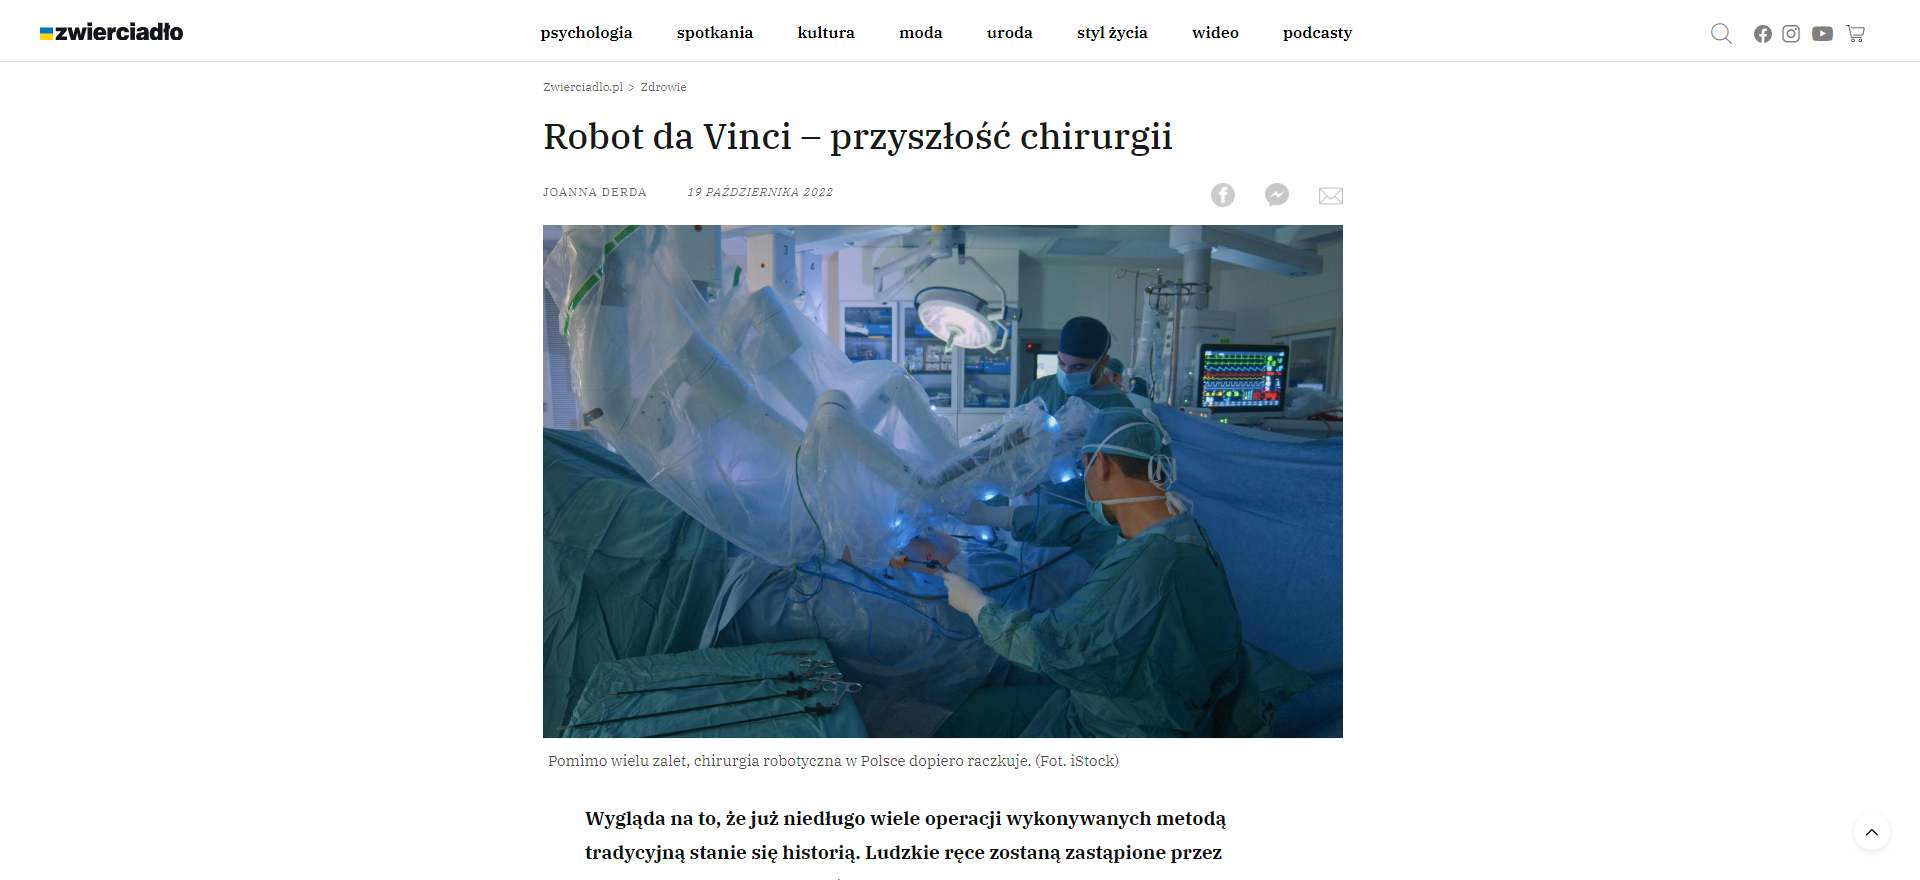 robot da vinci przyszlosc chirurgii